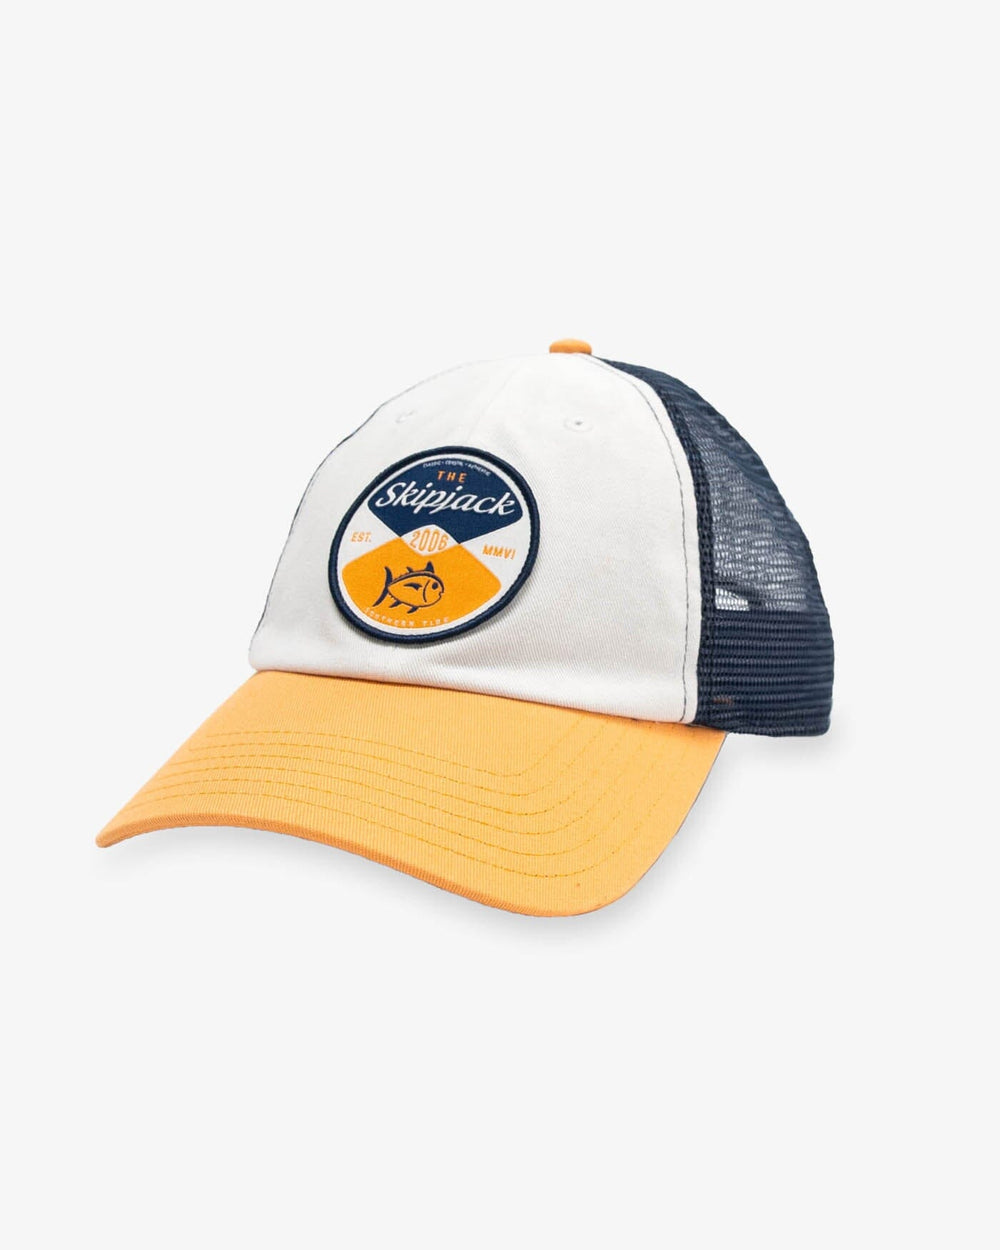 The Skipjack Trucker Hat